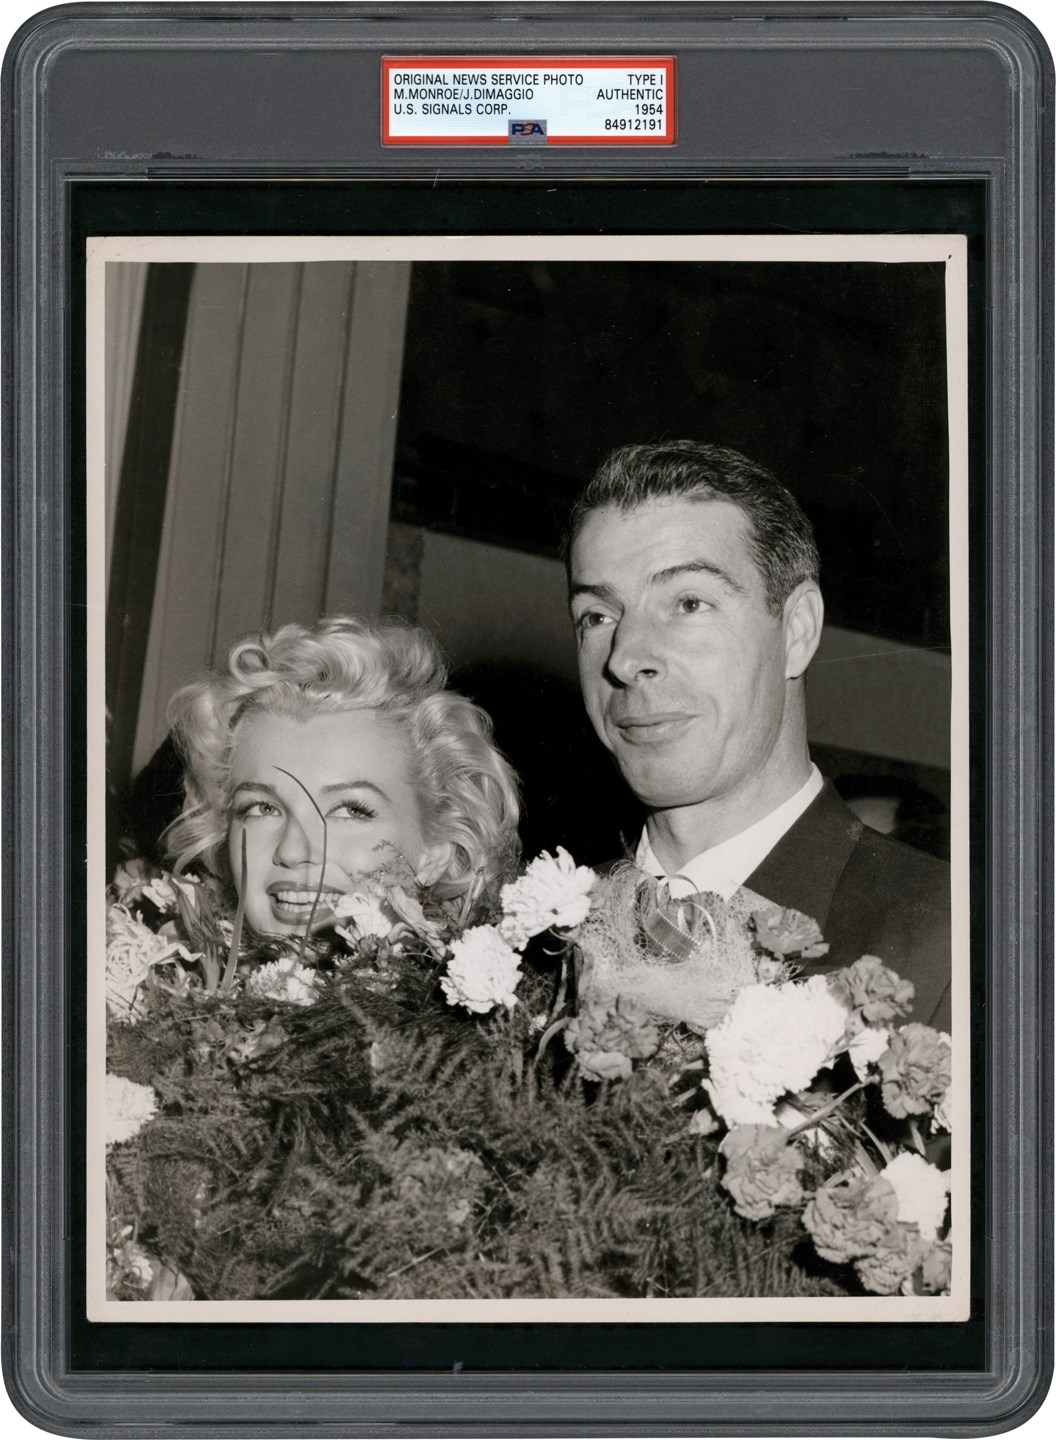 Rock And Pop Culture - 1954 Marilyn Monroe & Joe DiMaggio Honeymoon Original Photograph (PSA Type I)